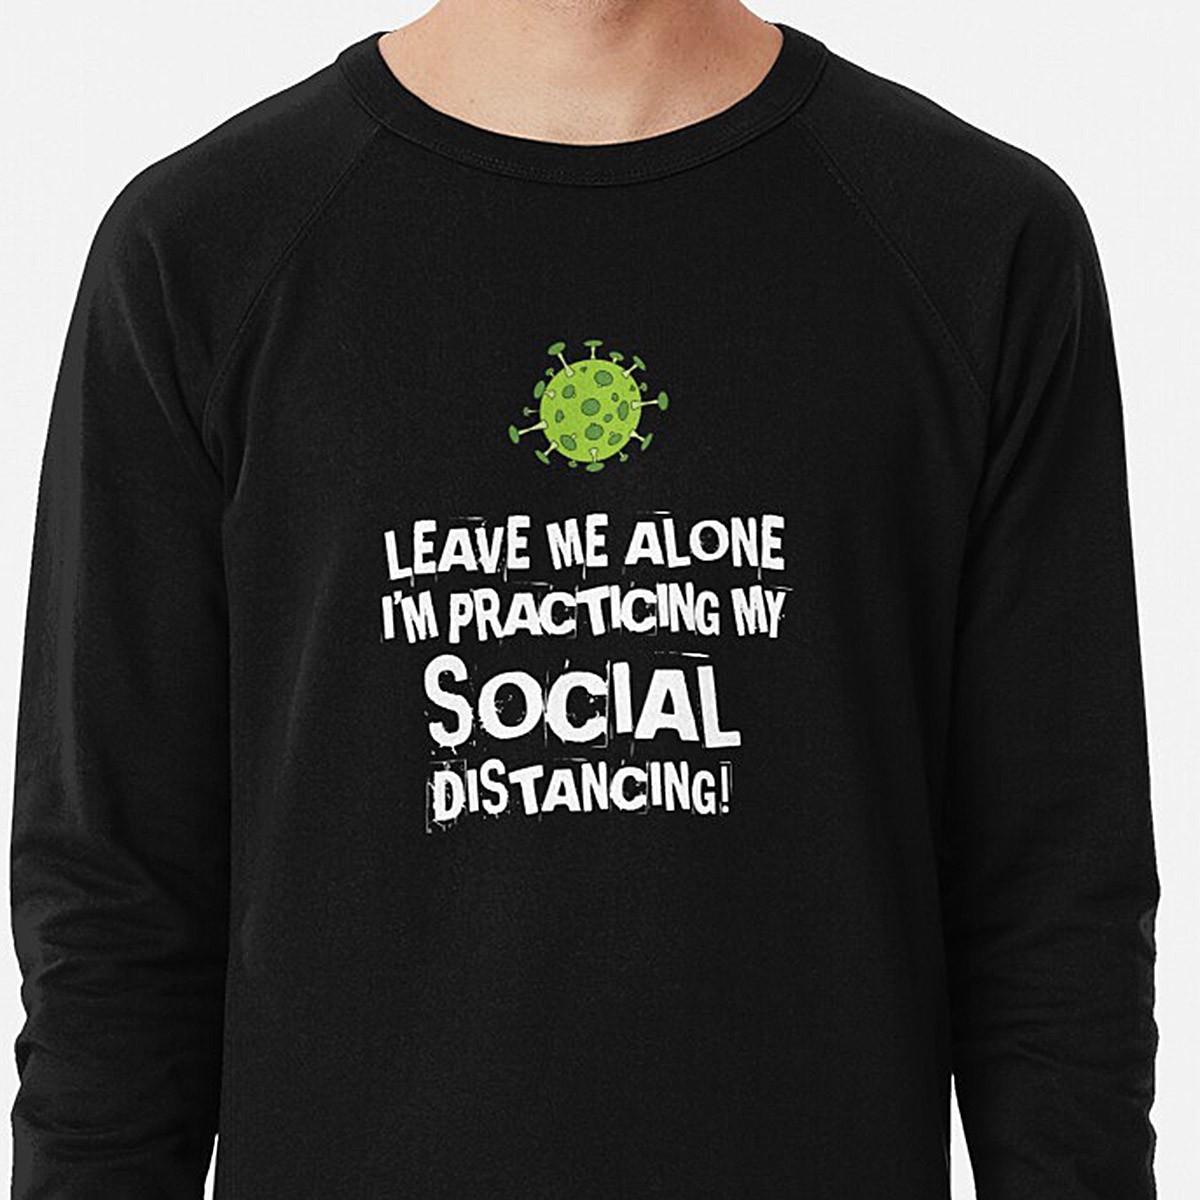 Practicing Social Distancing Lightweight Sweatshirt by NTK Apparel